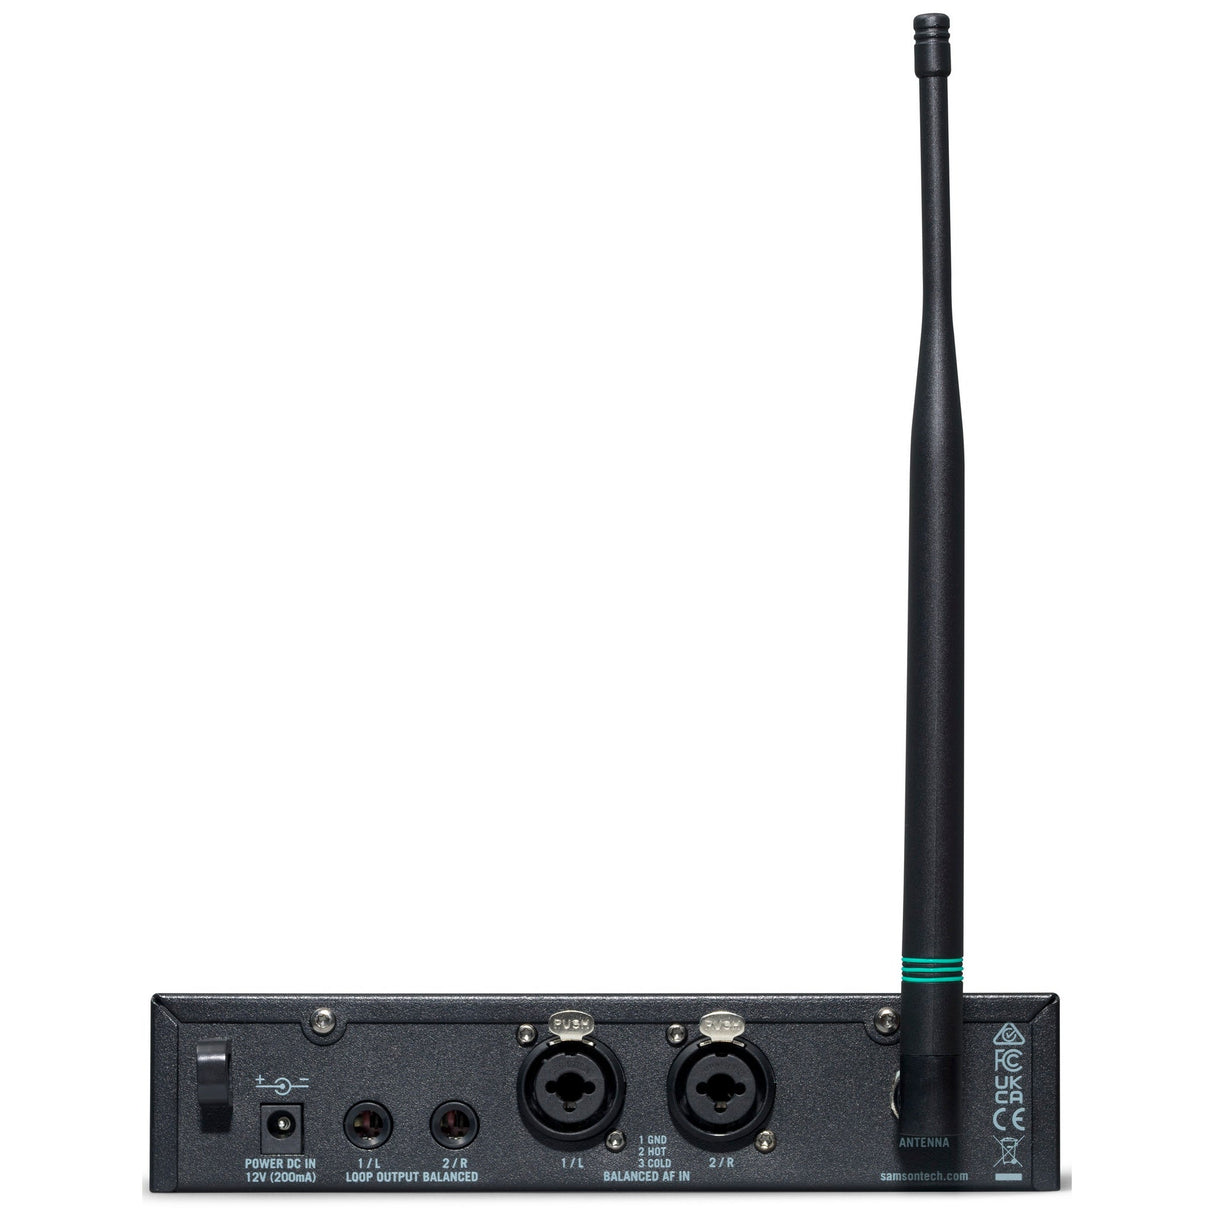 Samson EarAmp EWM100 Wireless In-Ear Monitor System, 470-502 MHz